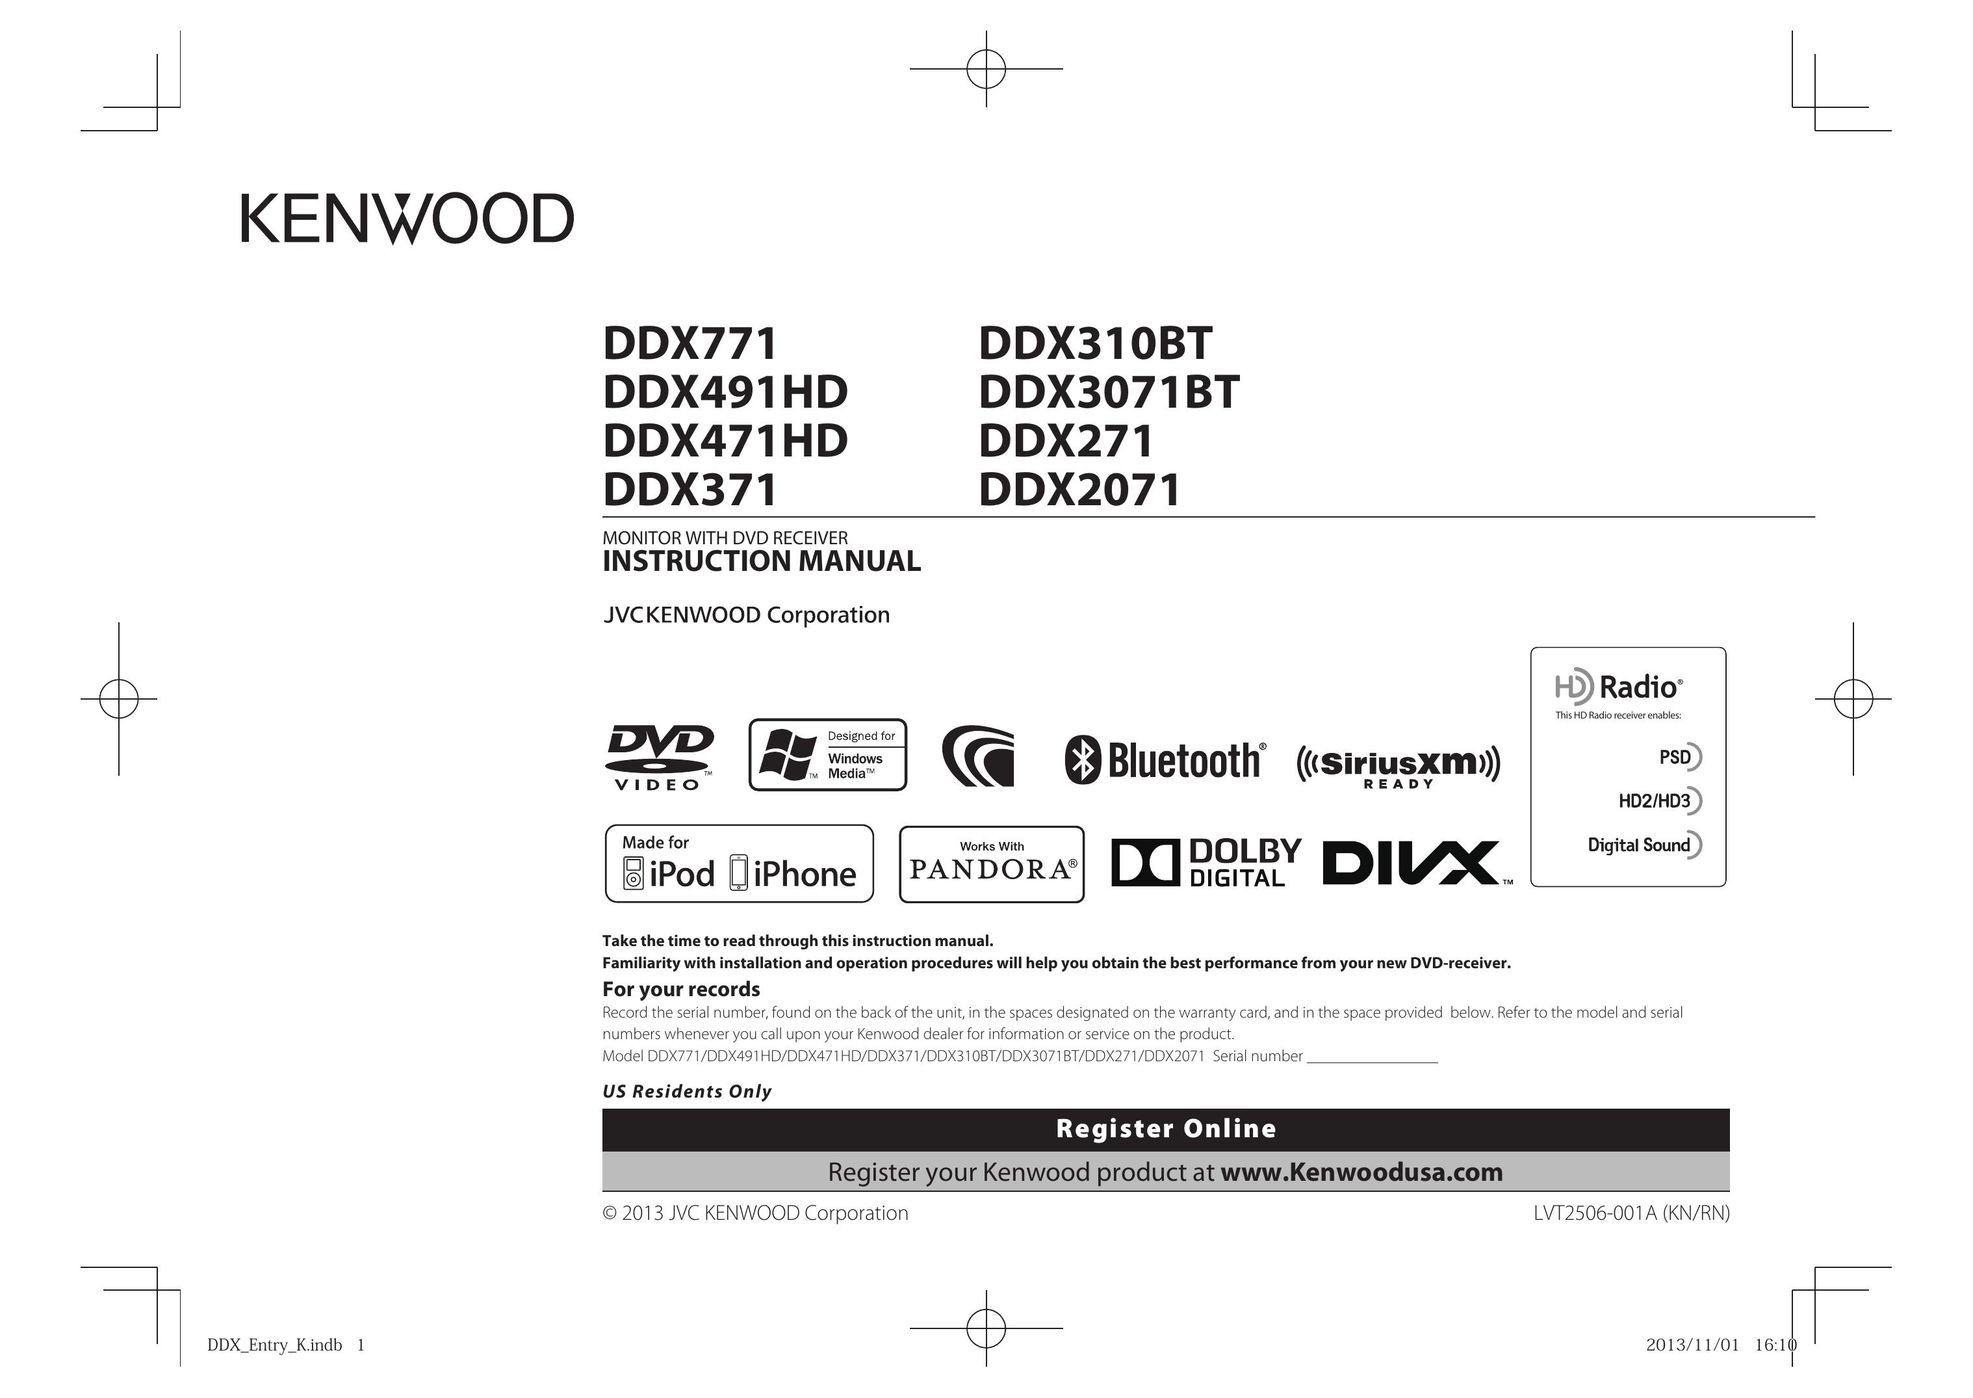 Kenwood DDX2071 Car Video System User Manual